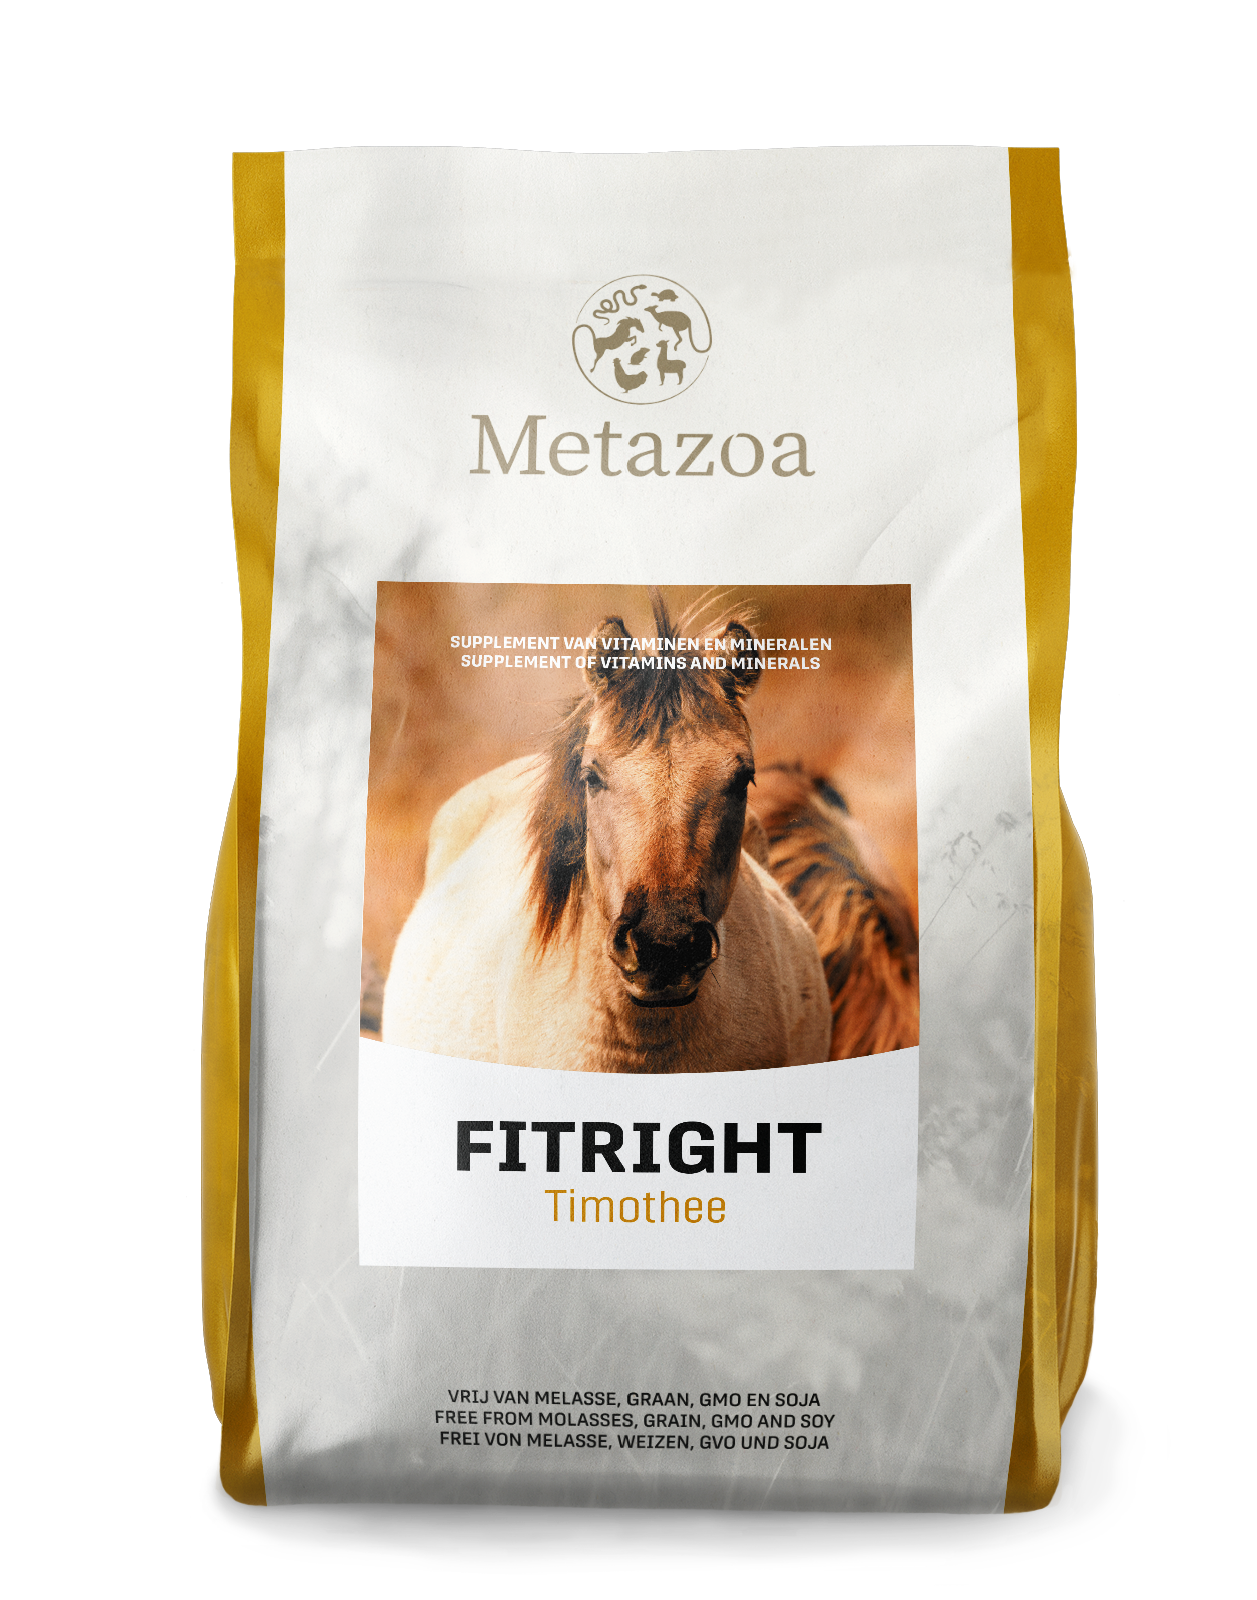 Download Metazoa FitRight timothee verpakking 15 kg EAN 4260176355007